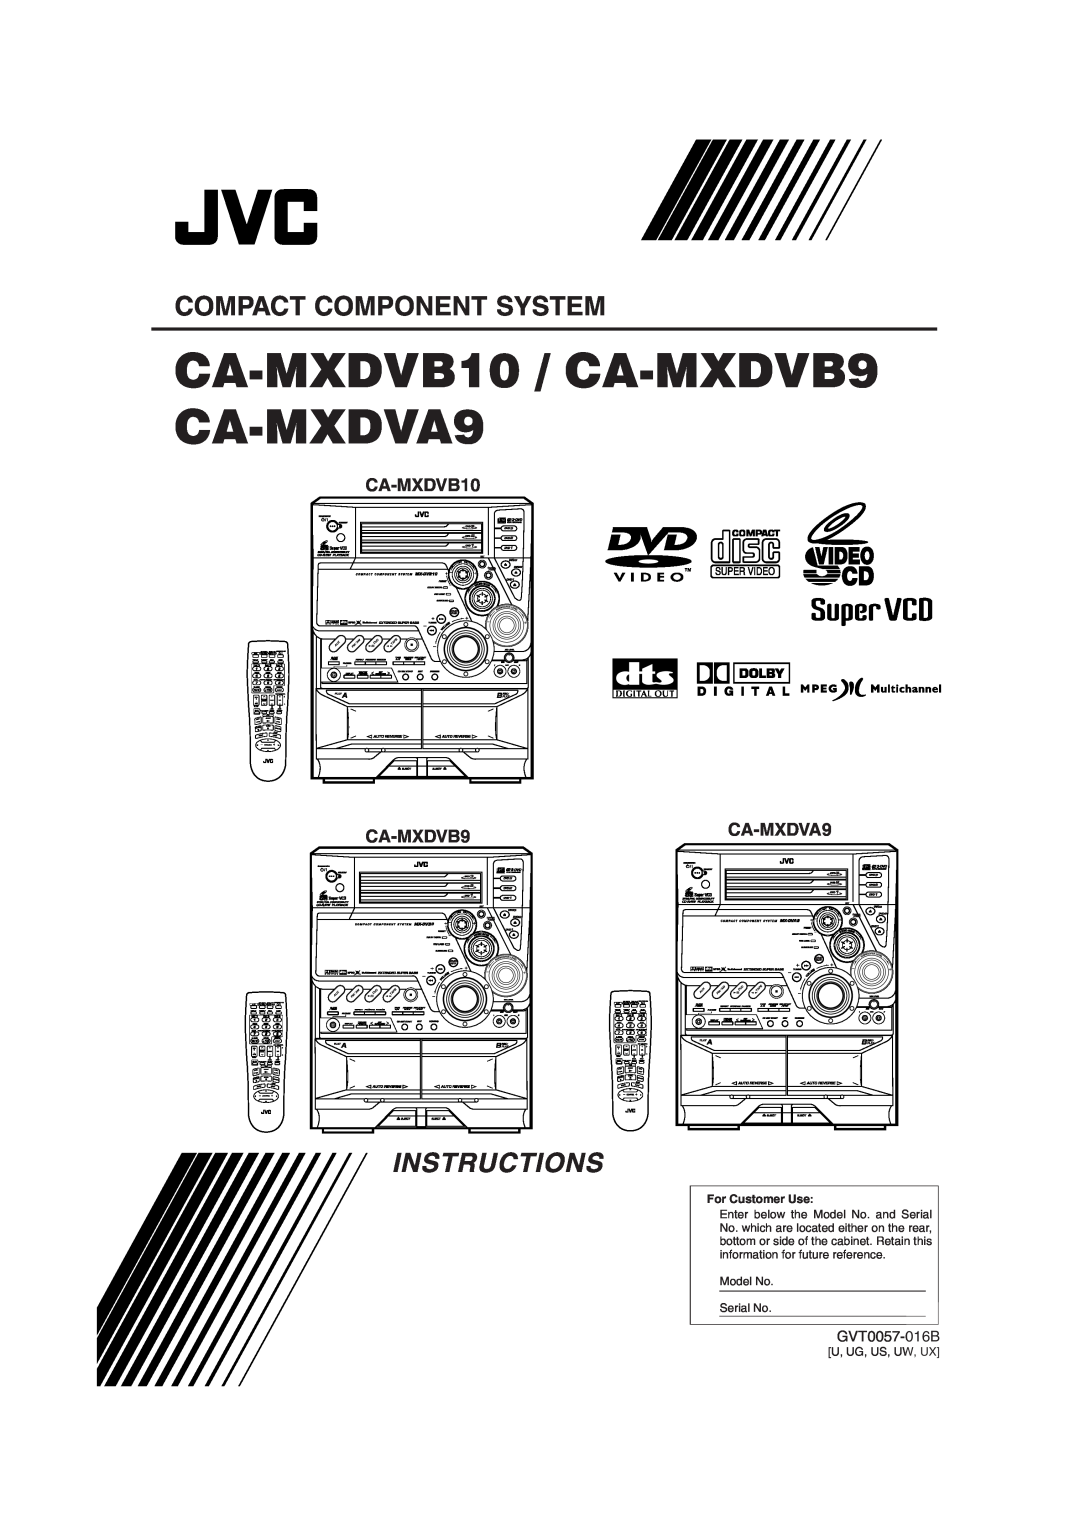 JVC manual Instructions, CA-MXDVB10 / CA-MXDVB9 CA-MXDVA9, Compact Component System, GVT0057-016B 